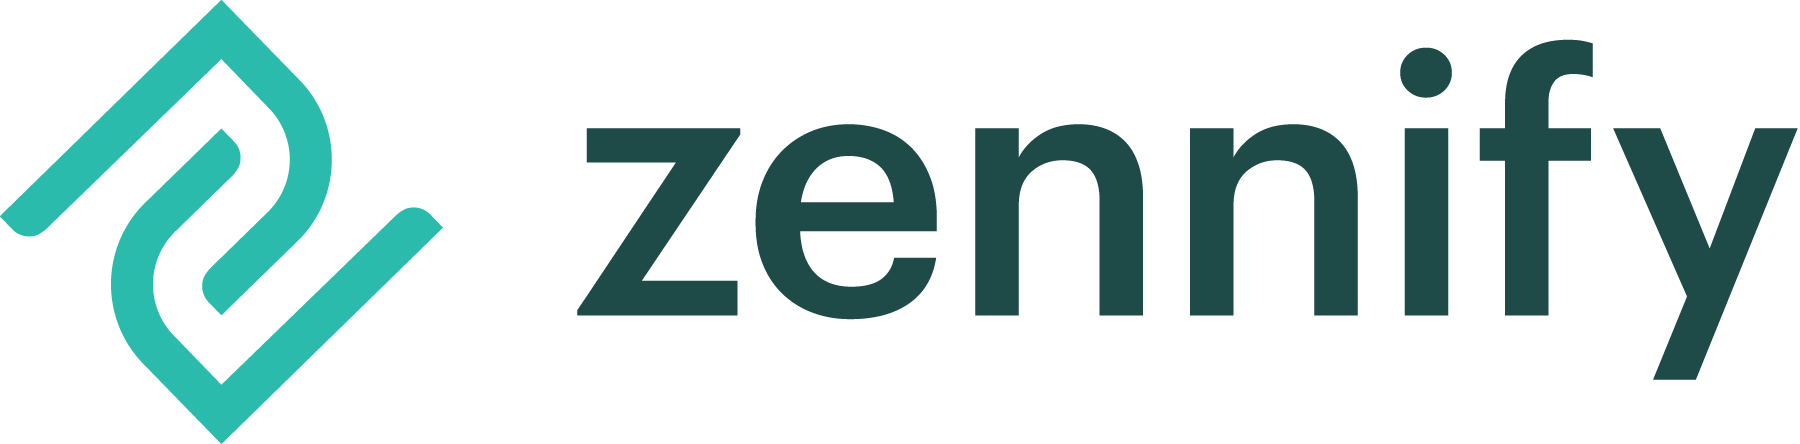 Zennify logo